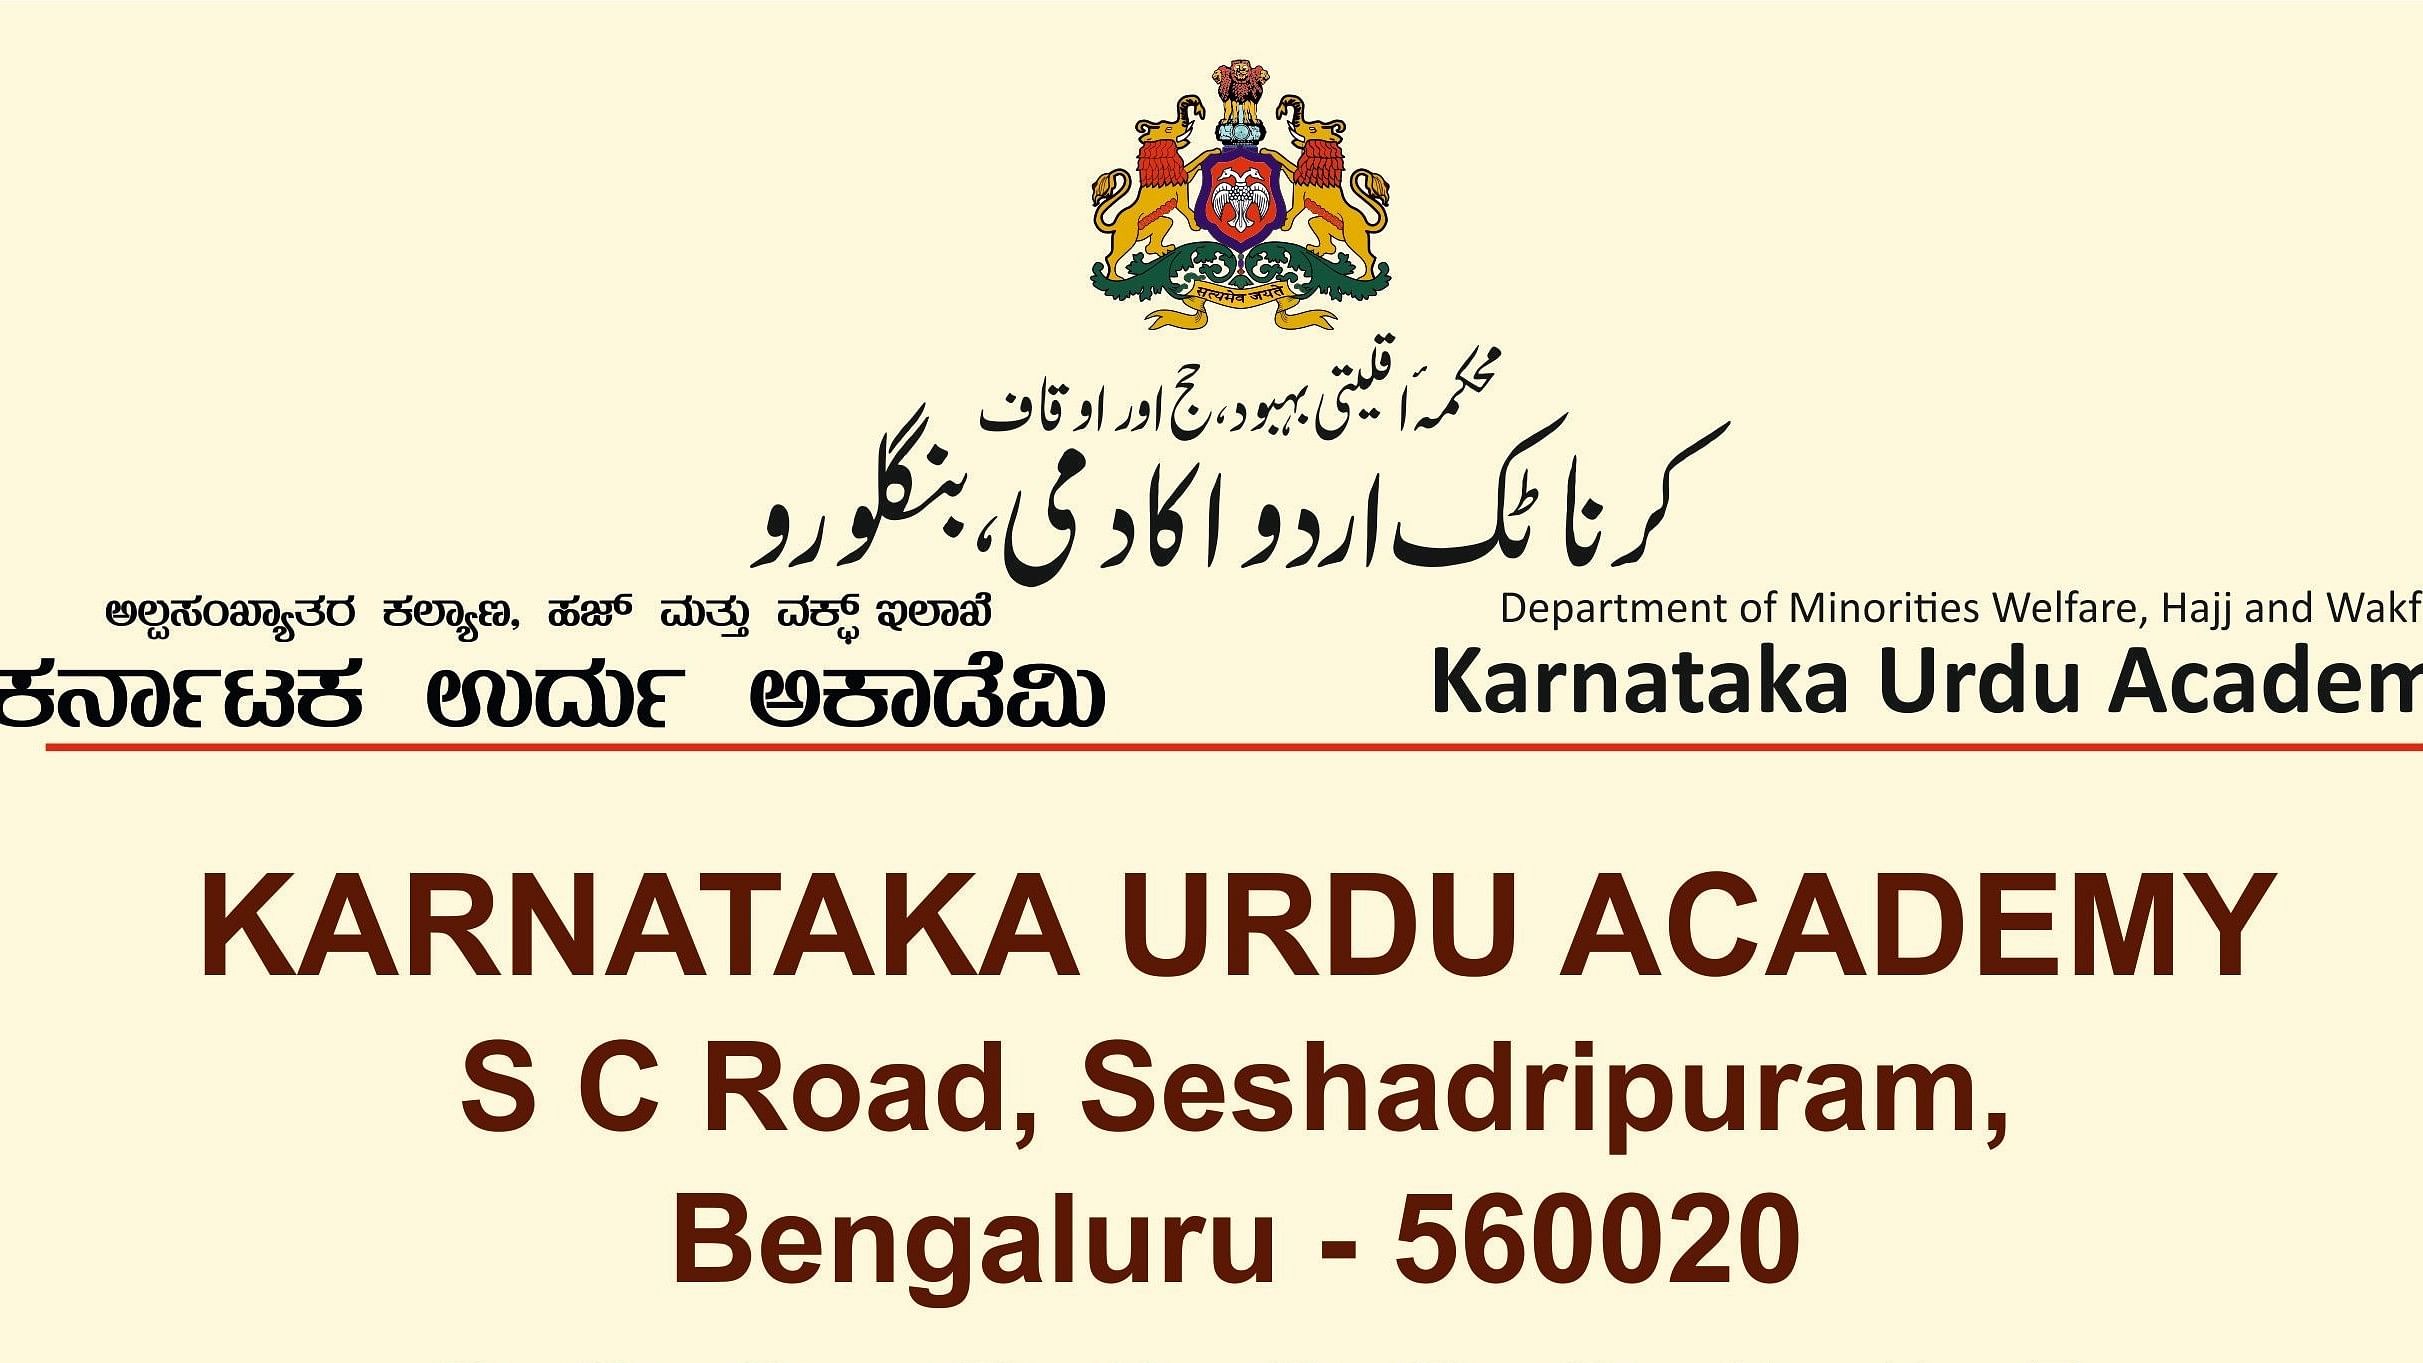 <div class="paragraphs"><p>Karnataka Urdu Academy.</p></div>